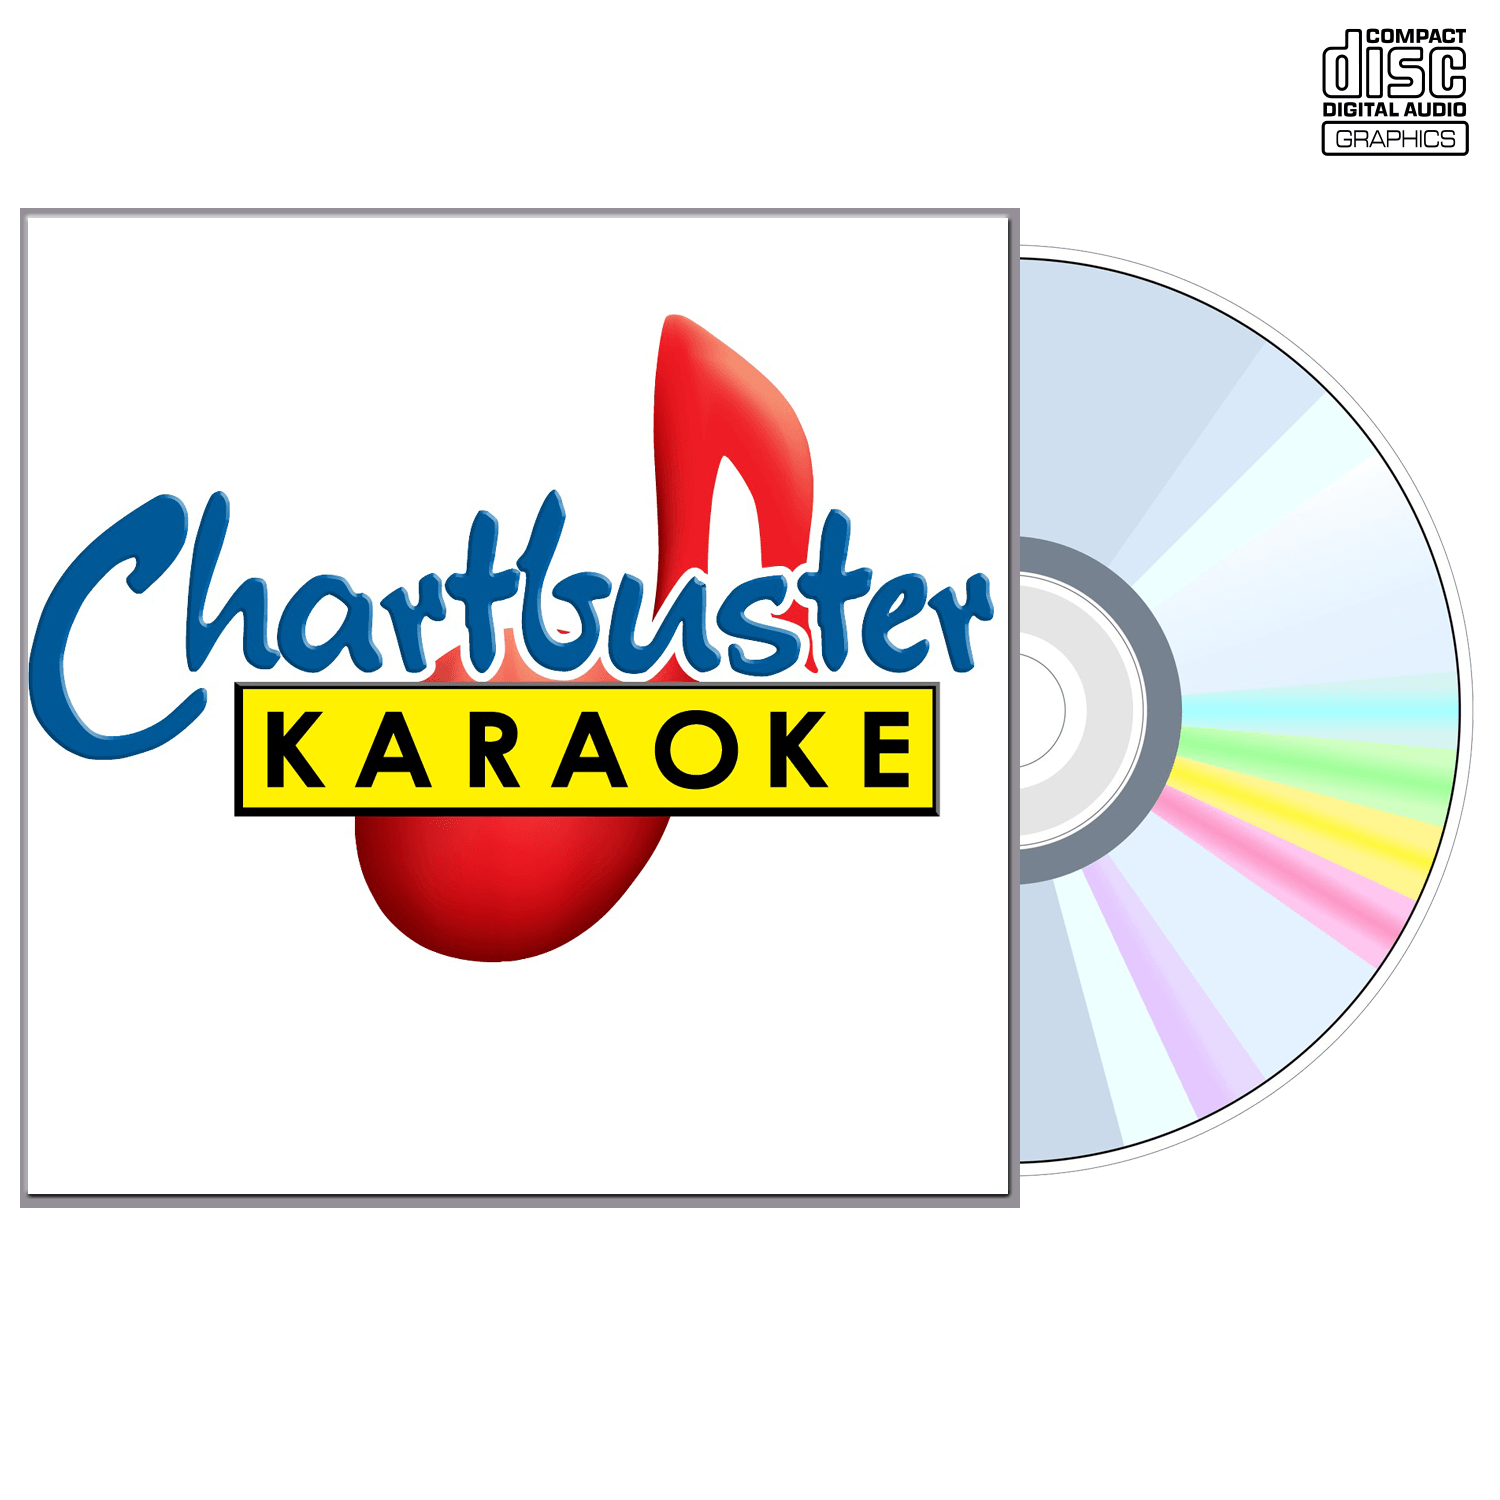 Angie Stone - CD+G - Chartbuster Karaoke - Karaoke Home Entertainment